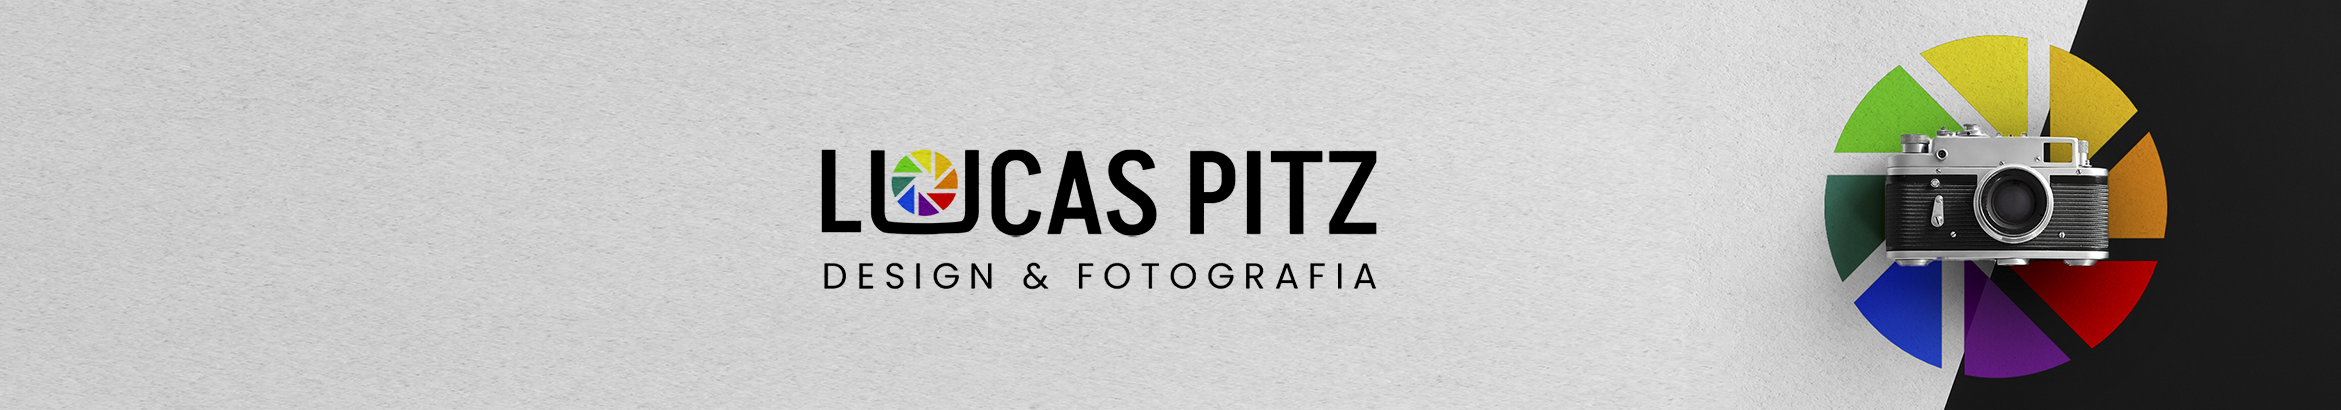 Lucas Pitz Design's profile banner